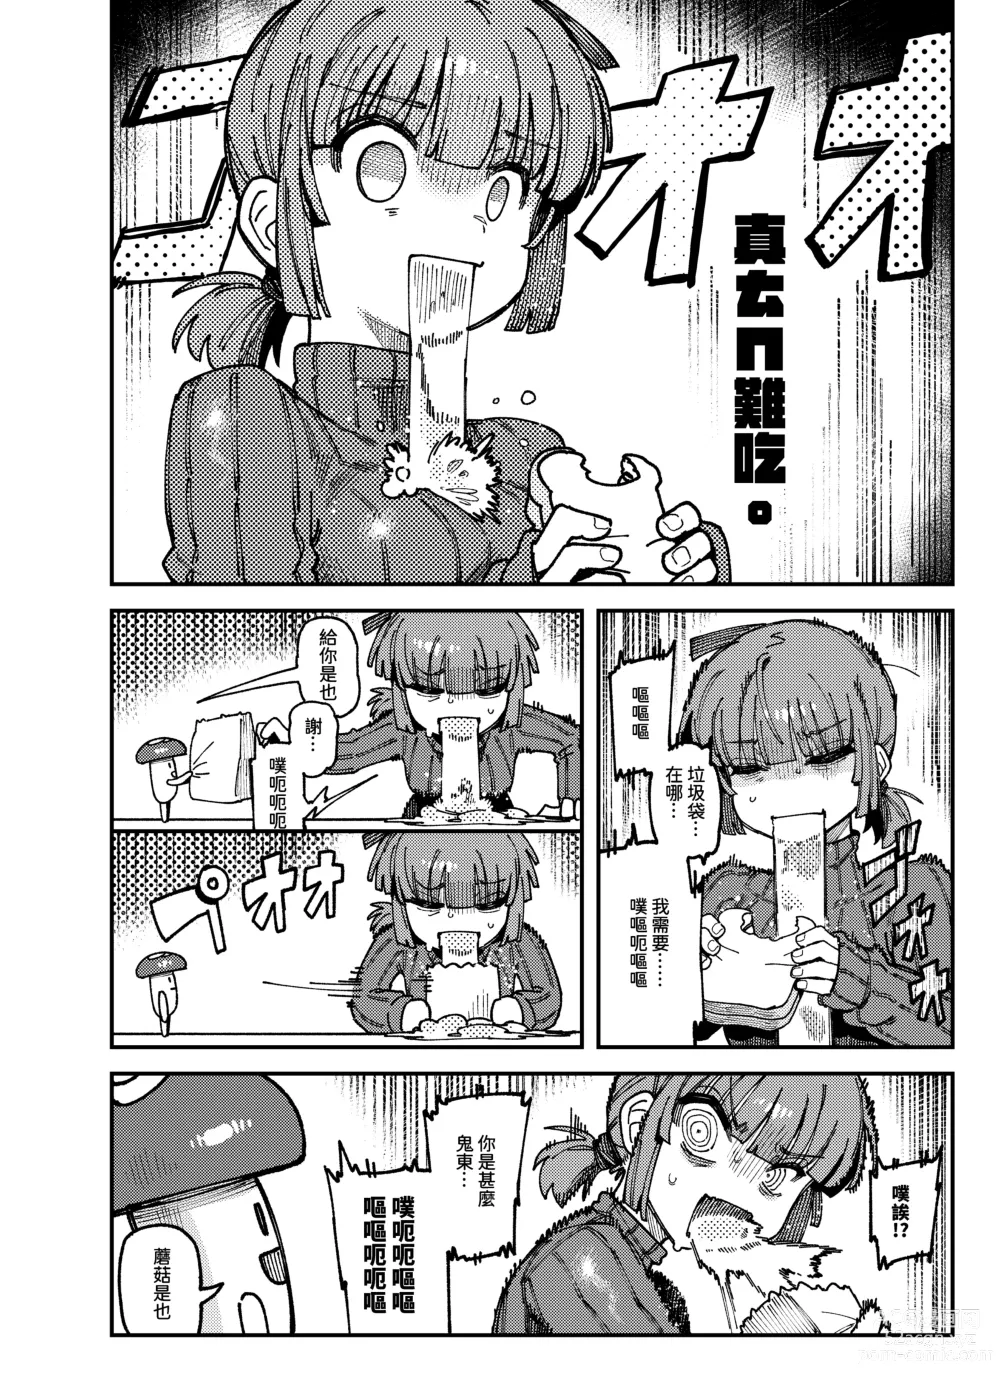 Page 5 of doujinshi 家裡過於潮濕長出致幻蘑菇意外誤食後發情的那些事